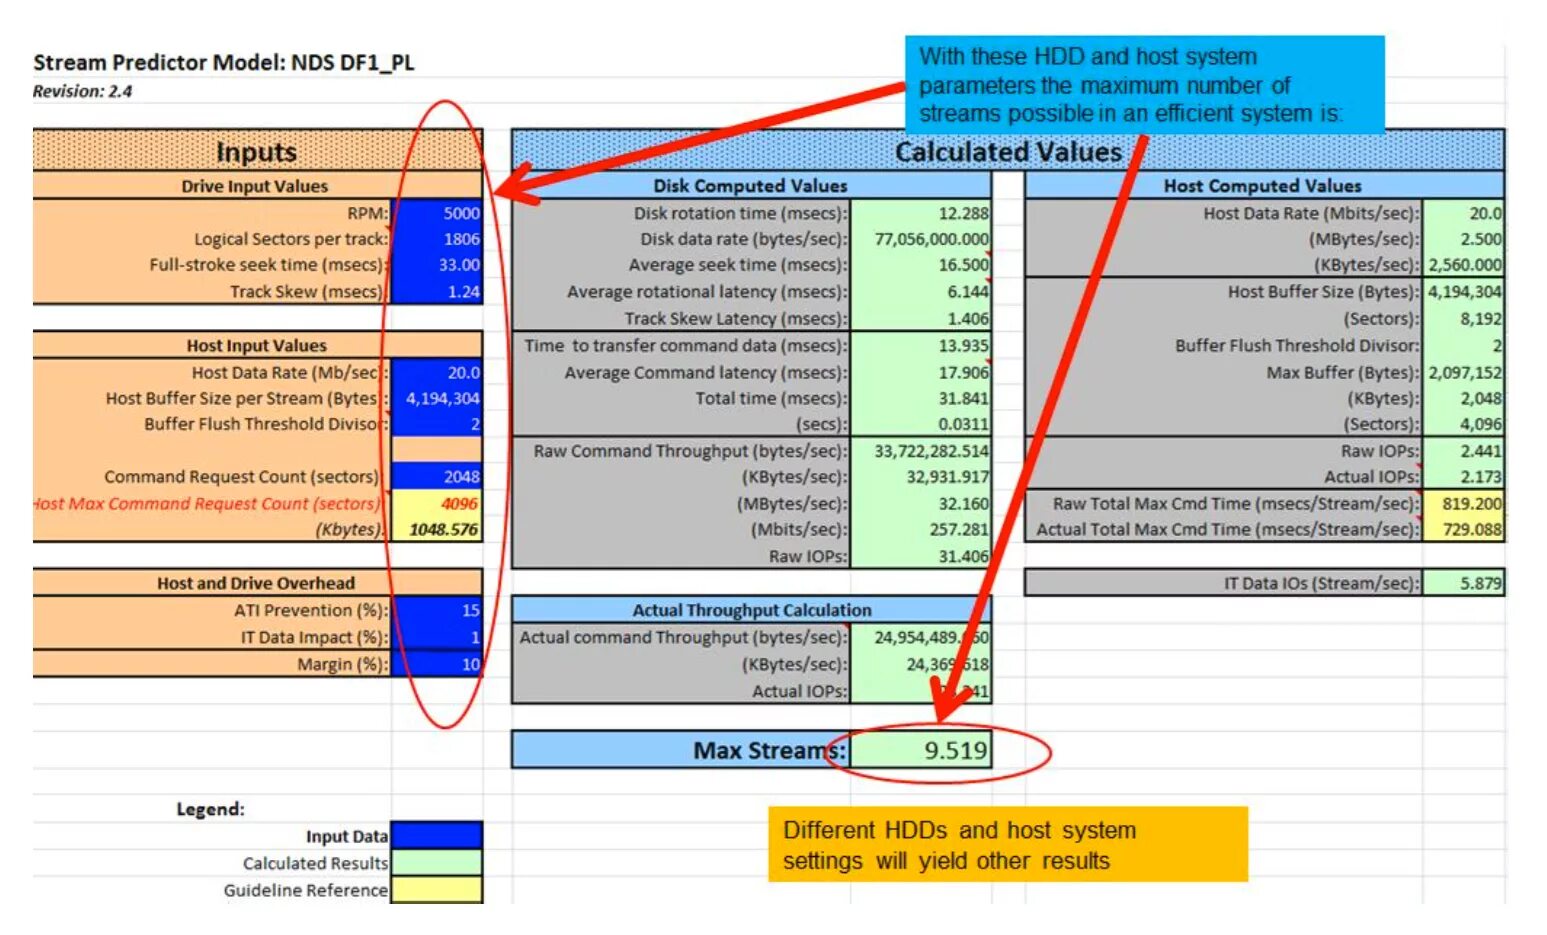 Seek time. Классификация HDD WD по цветам. Seek time/access time. Purple WD таблица характеристик. WD диски характеристики по цветам.